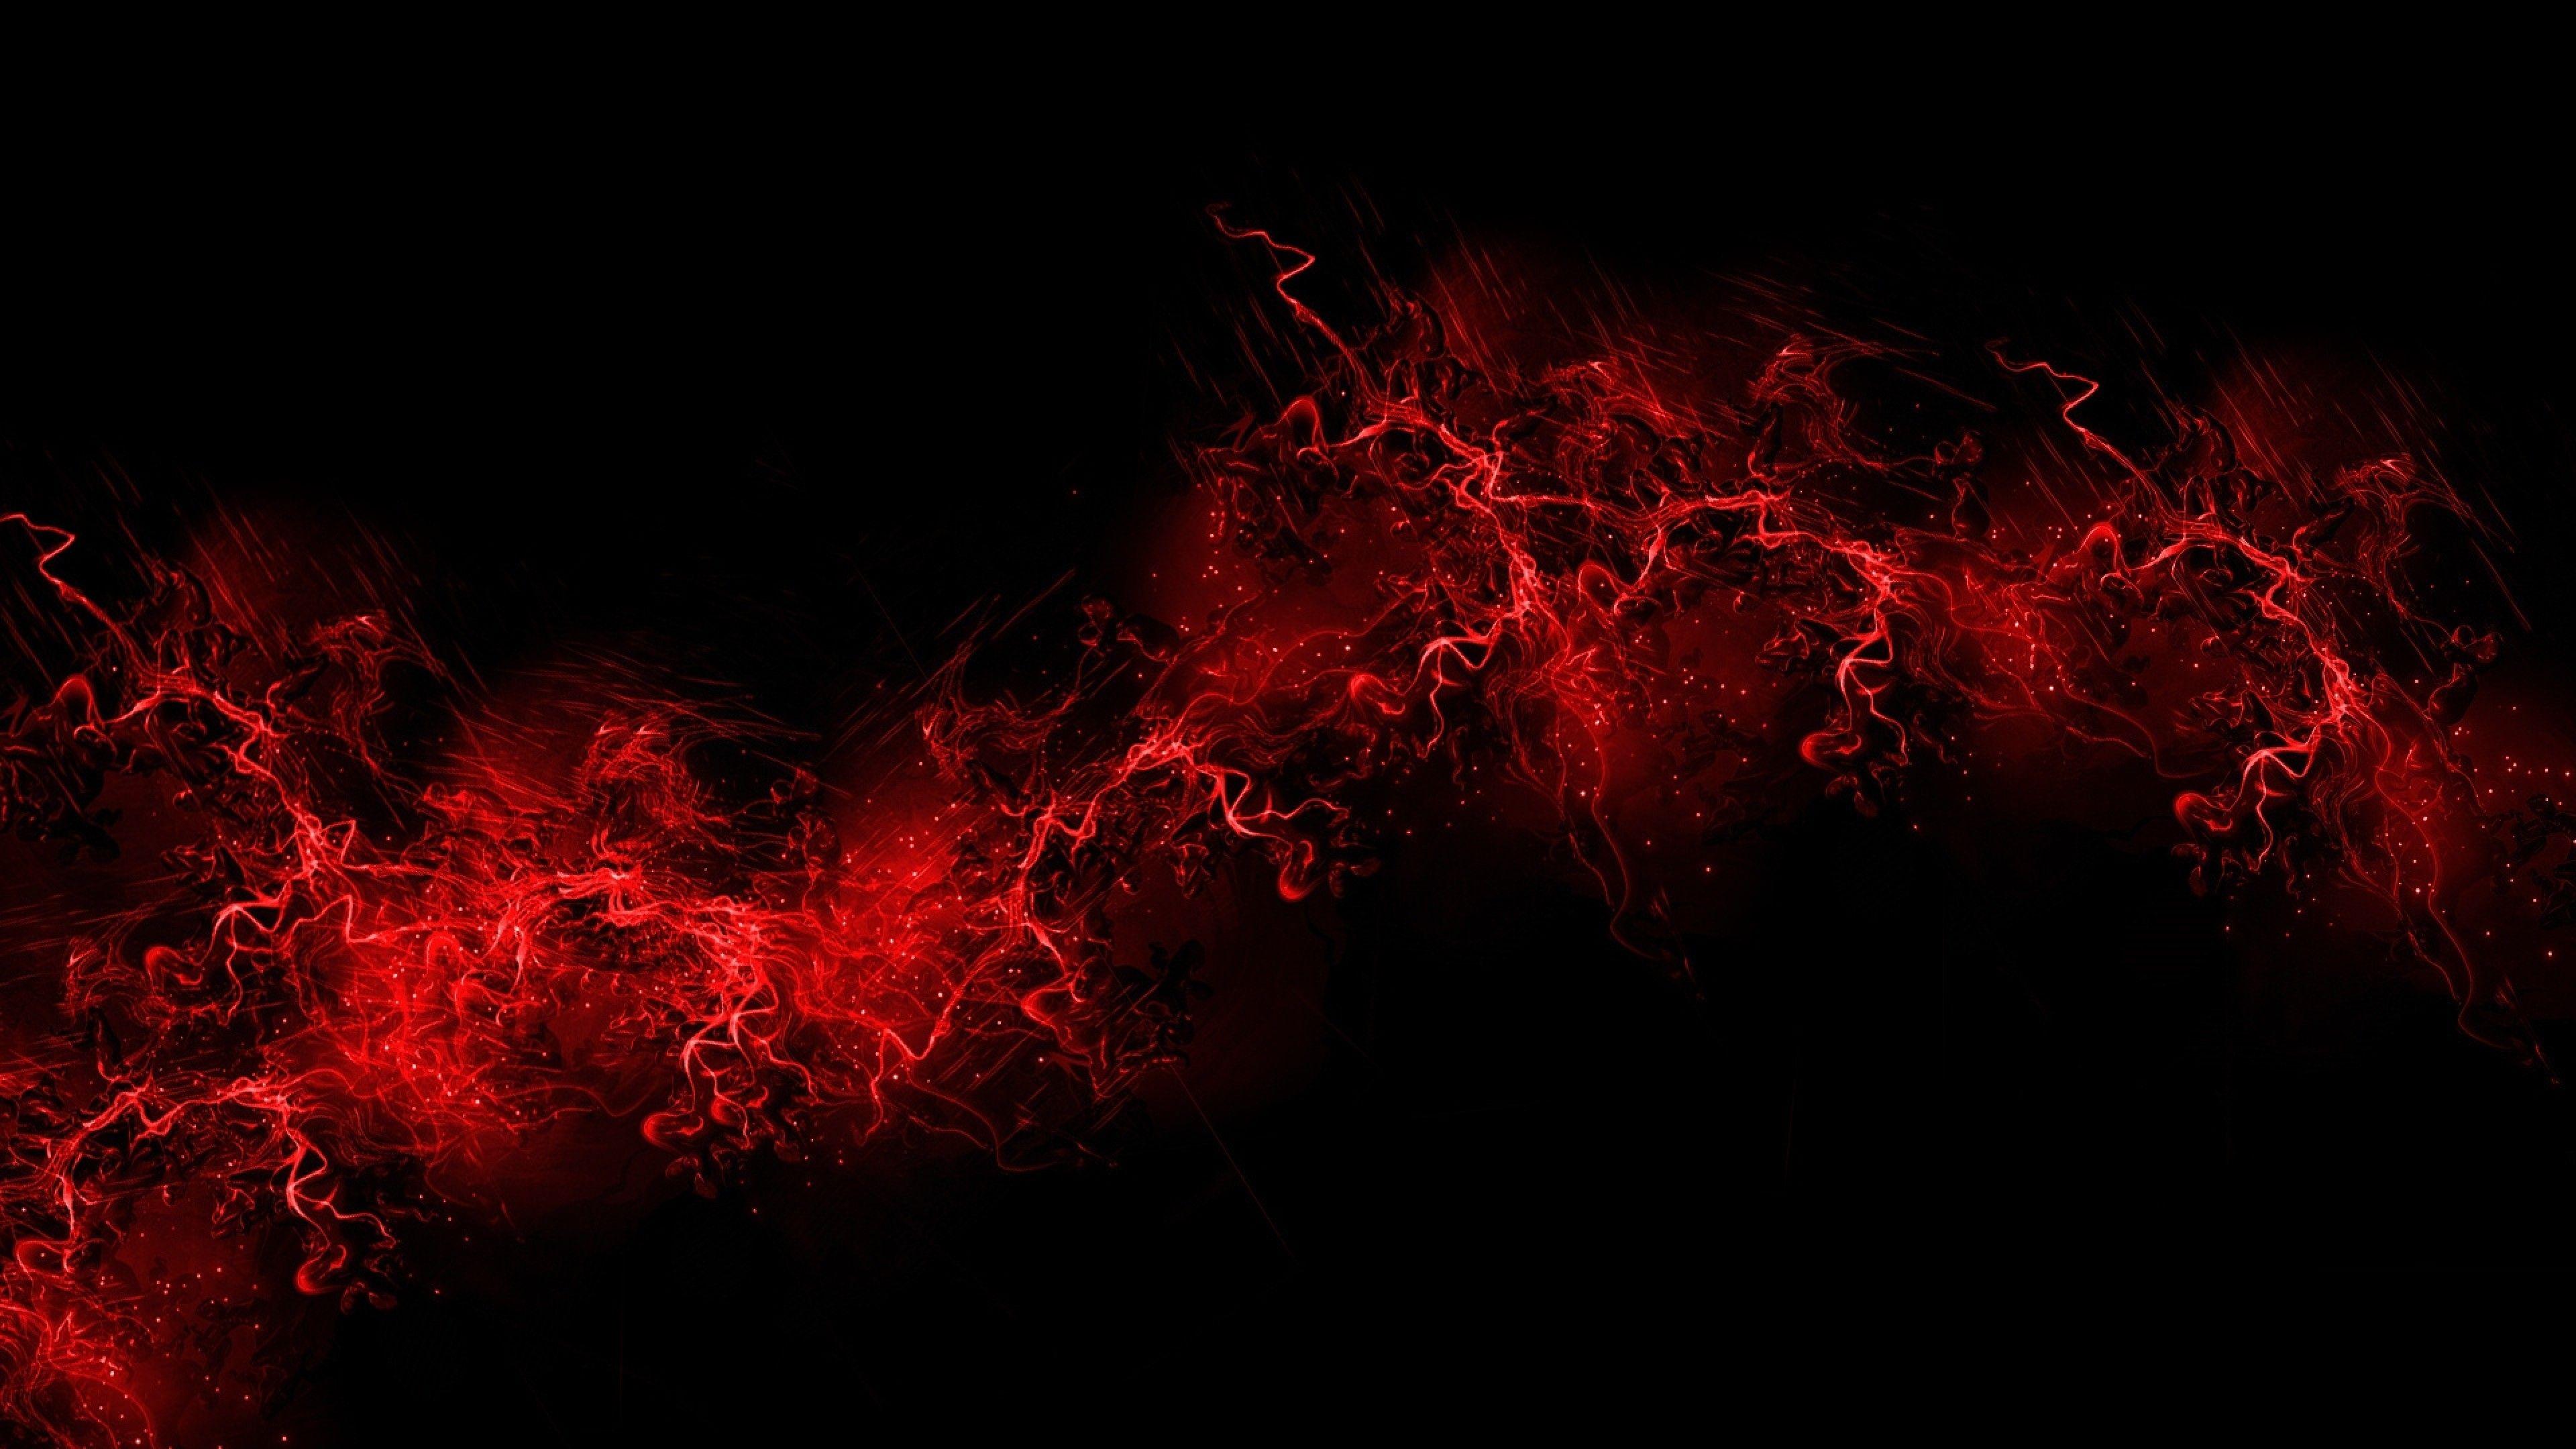 Red Galaxy 4K Ultra Hd Wallpapers - Top Free Red Galaxy 4K Ultra Hd